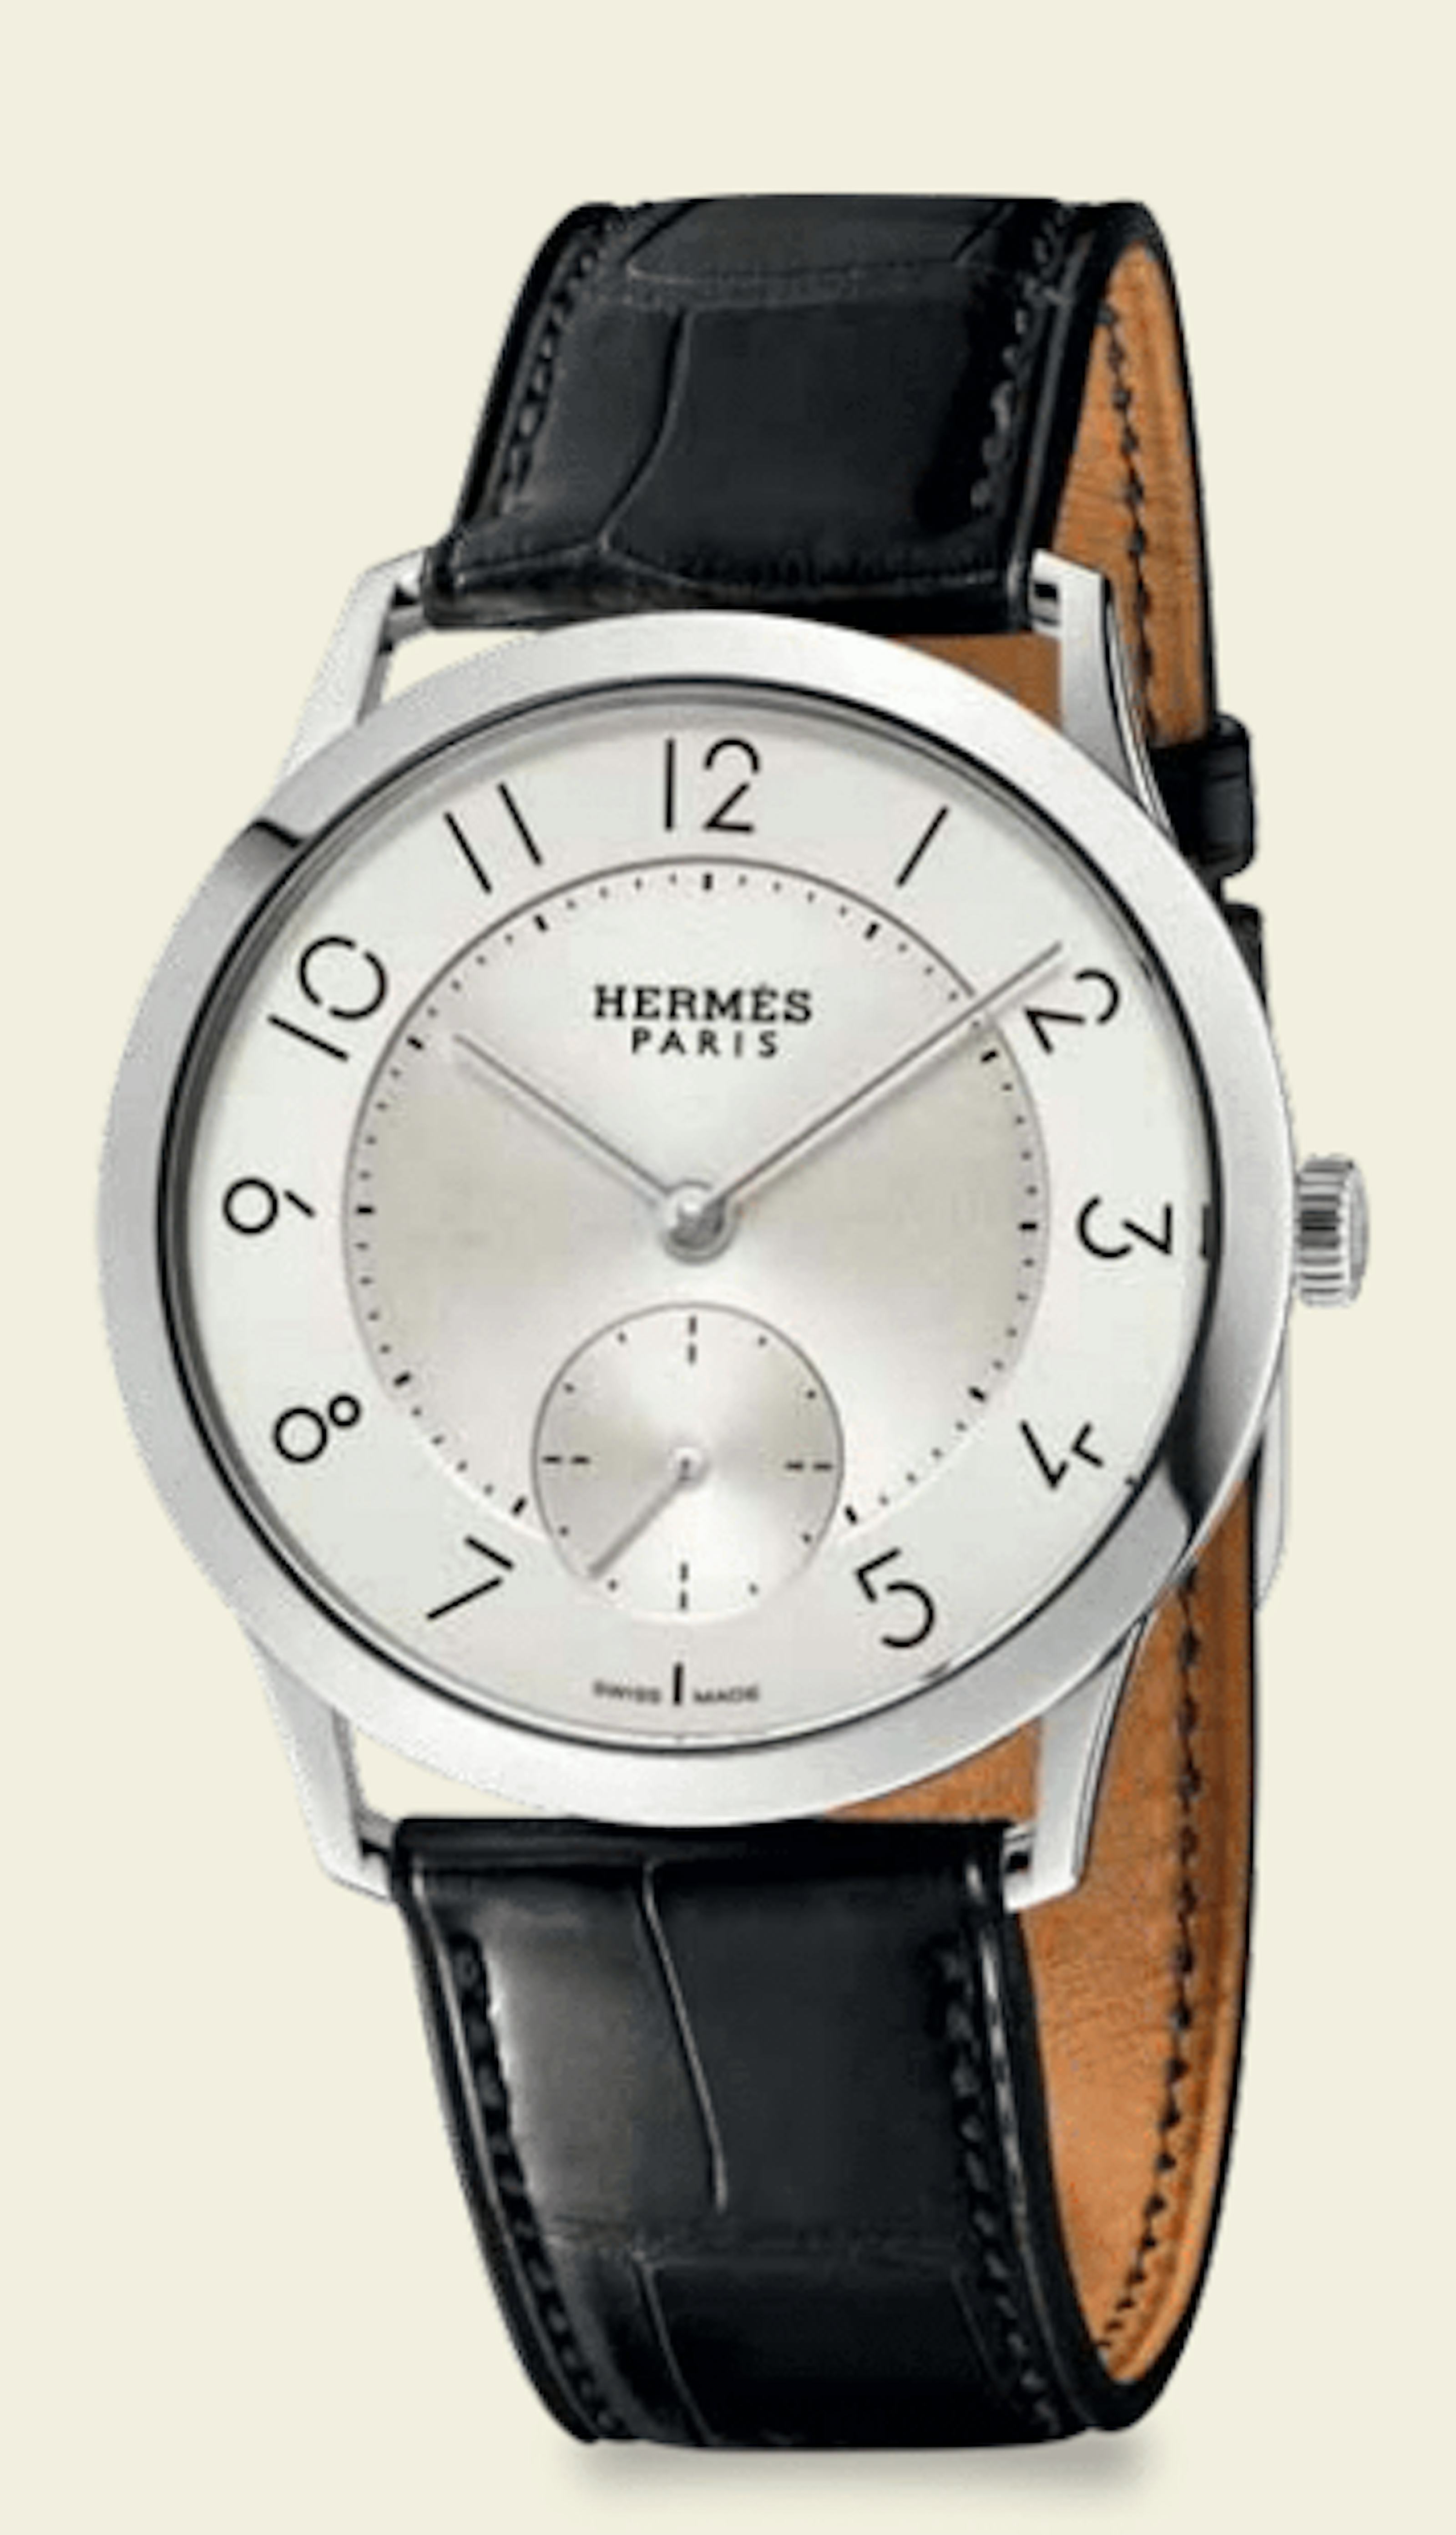 Hermès Thins Out: A Lean Typeface Graces A Slender Watch Collection